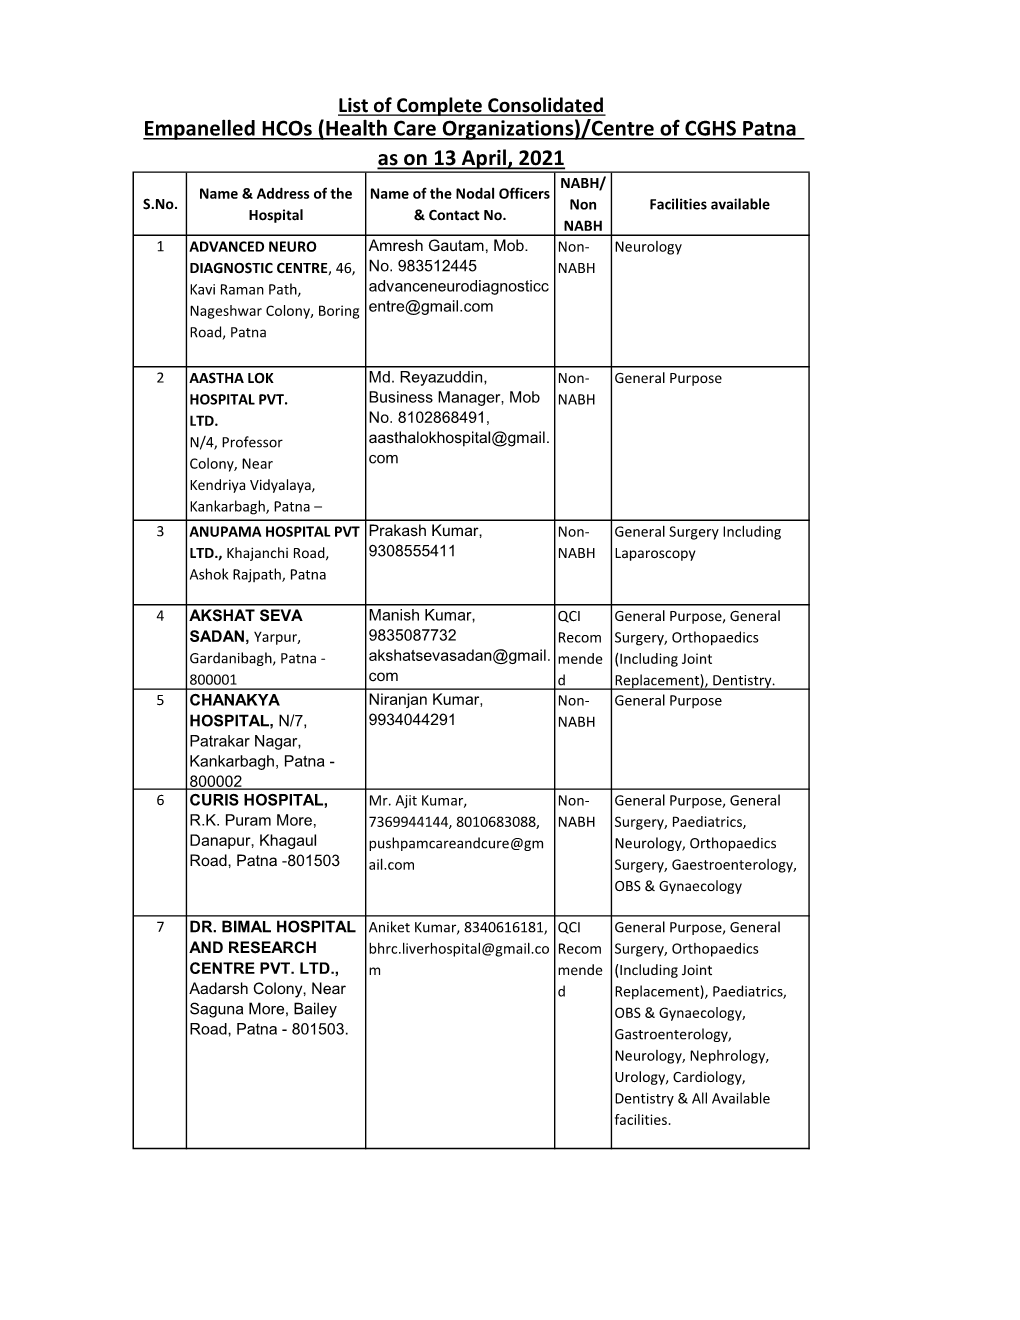 Cghs, Patna Empanelled Hospital Latest List As on 13.04.2021.Xlsx